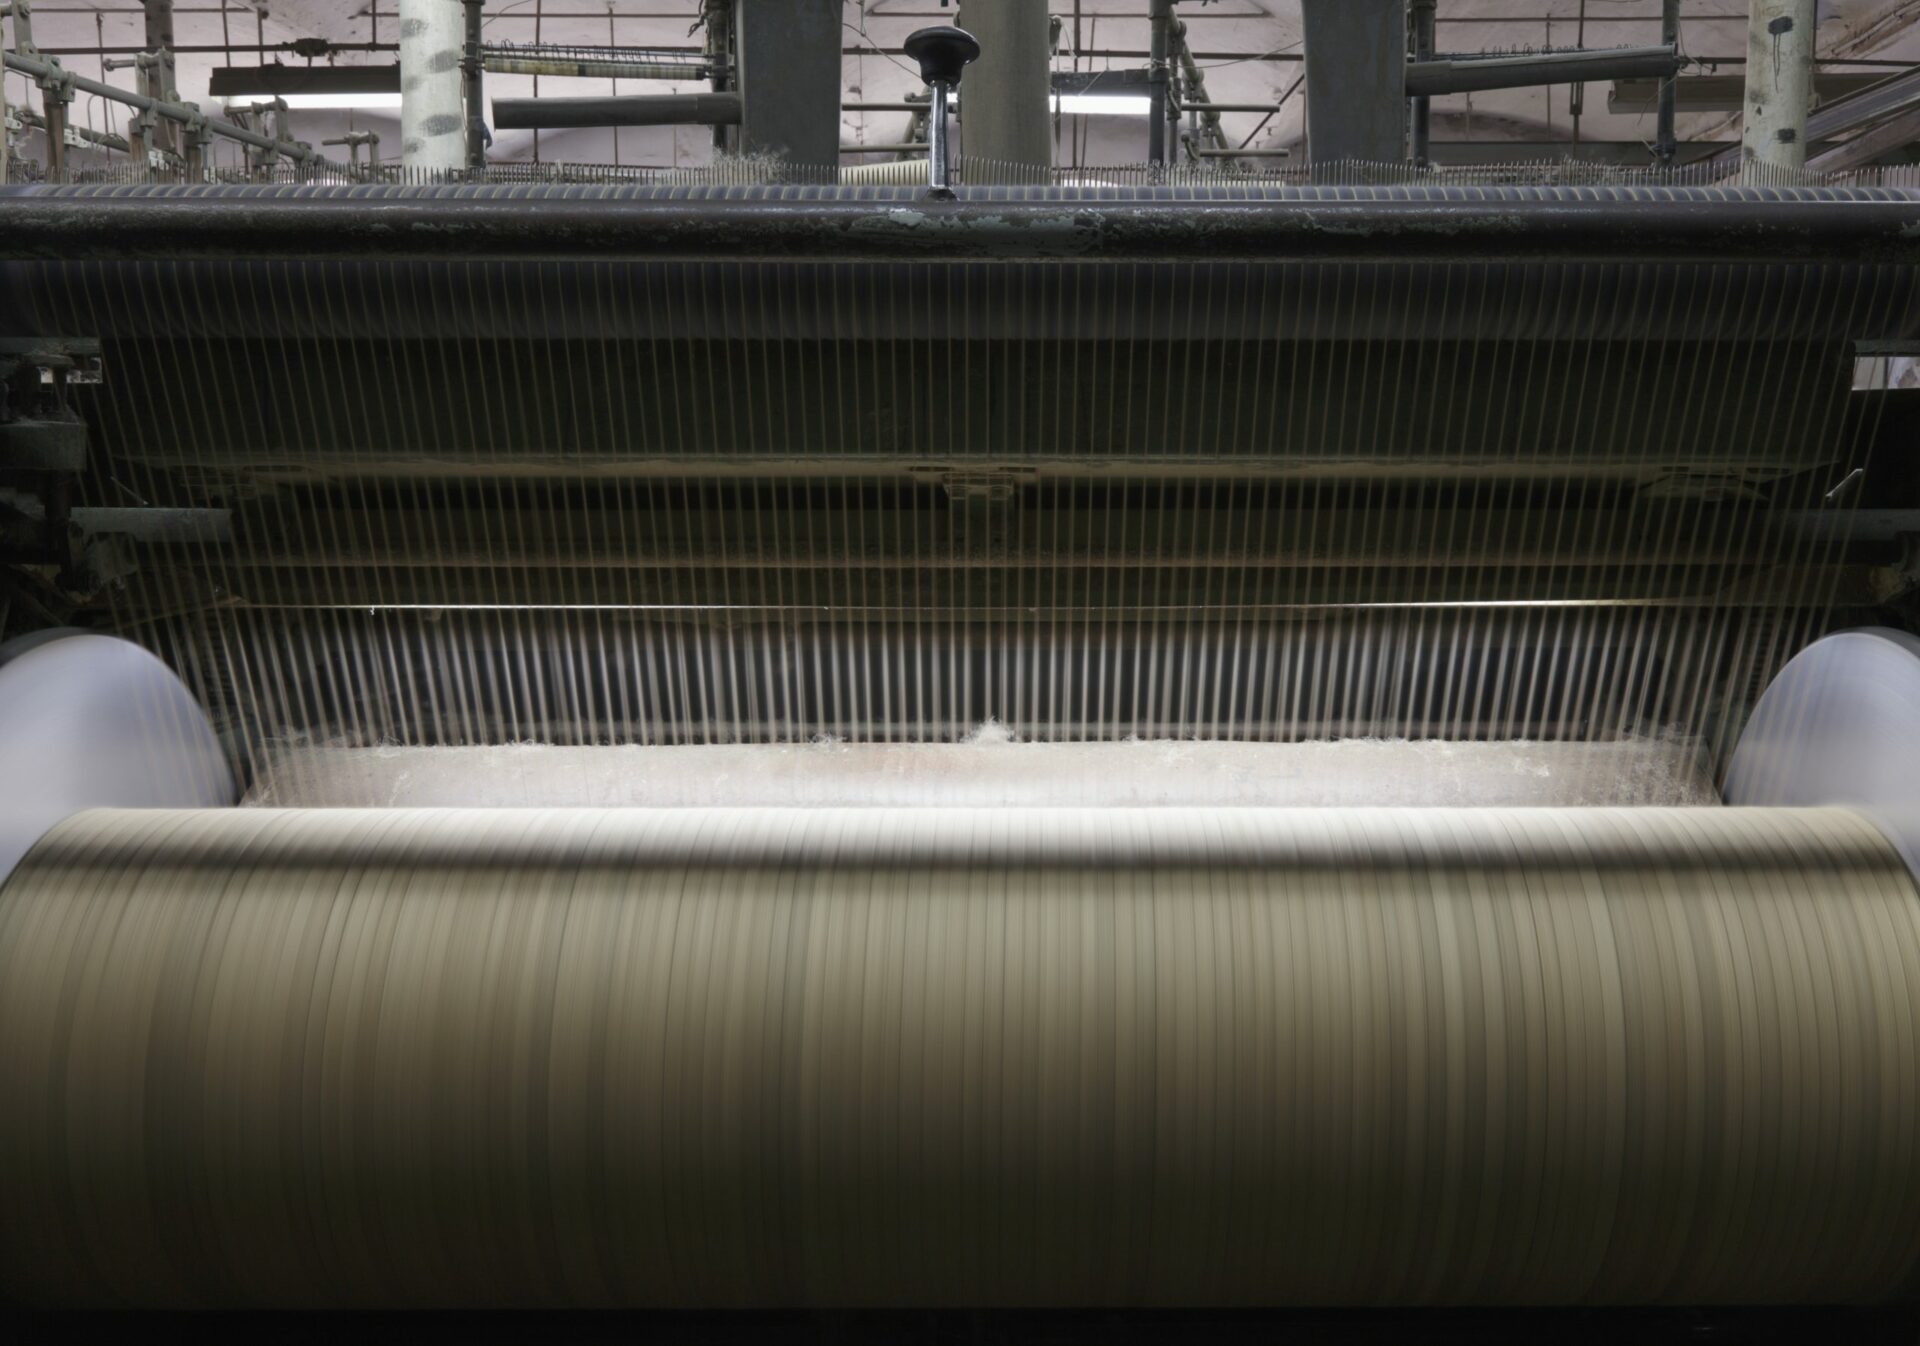 textile loom 2022 03 04 02 21 20 utc scaled